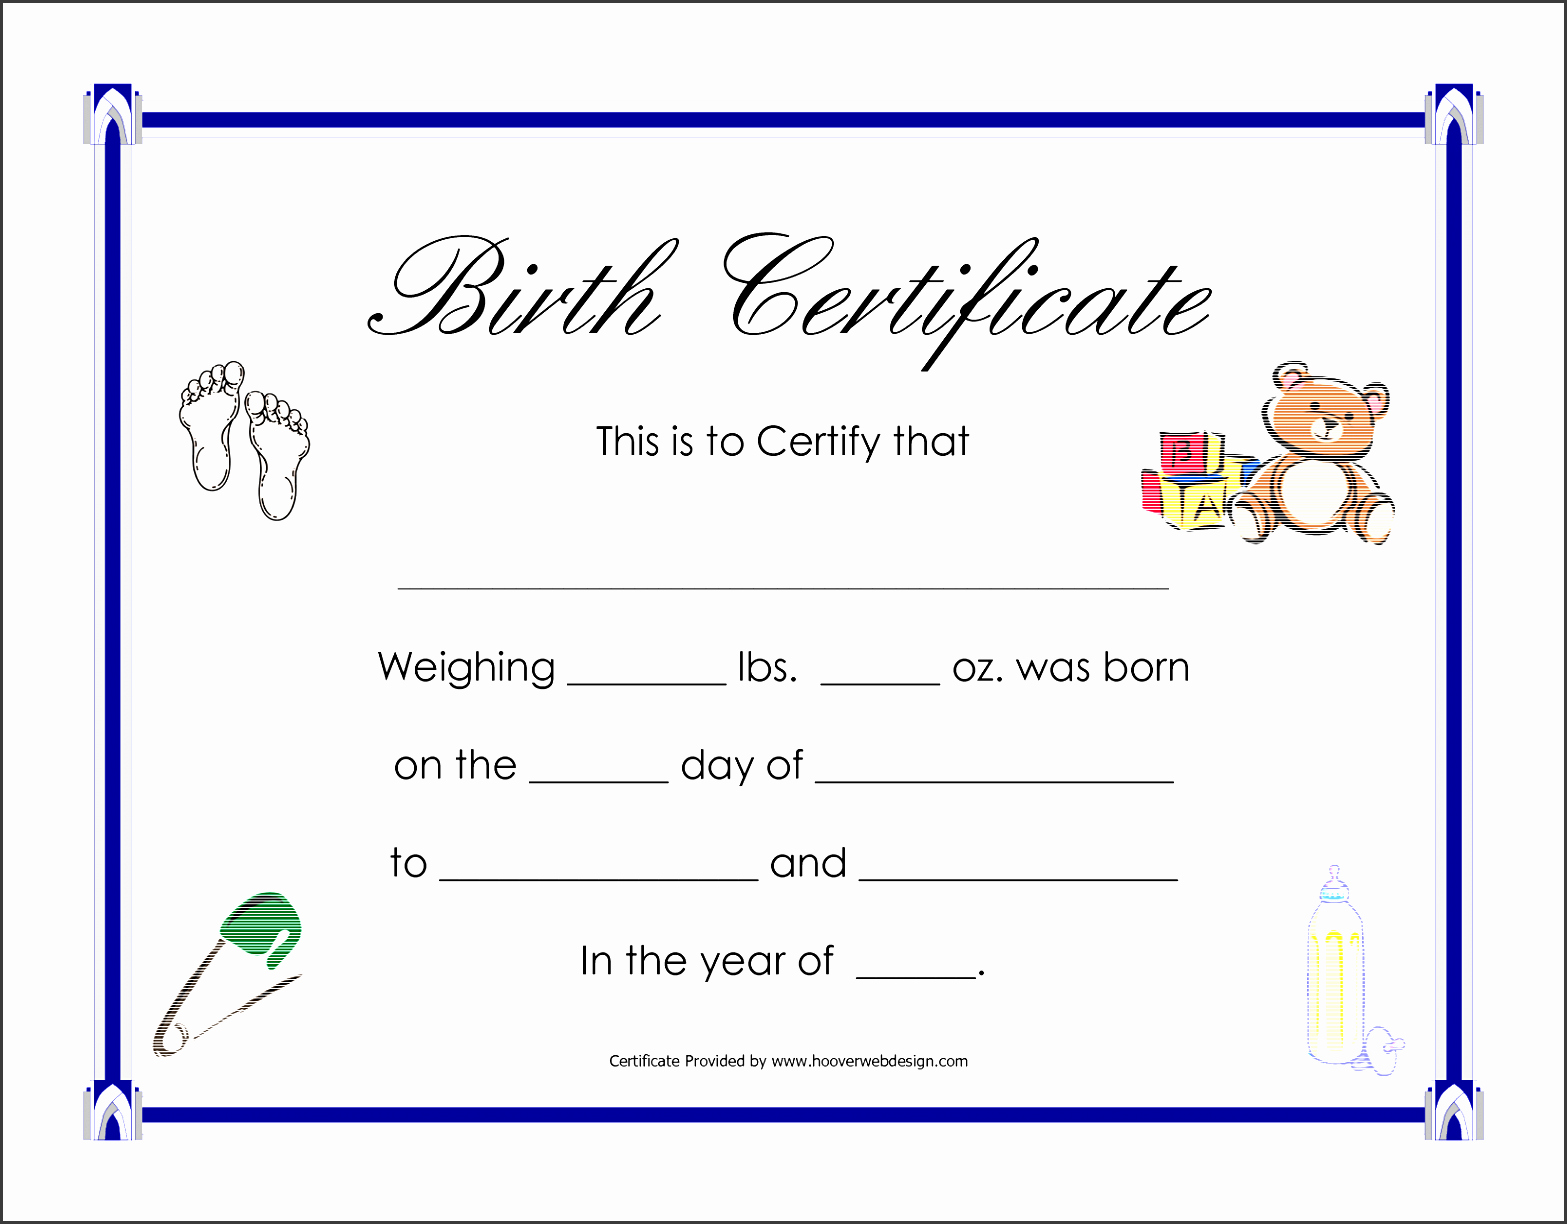 Old Birth Certificate Template Fresh 8 Birth Certificate Template In Pdf Sampletemplatess